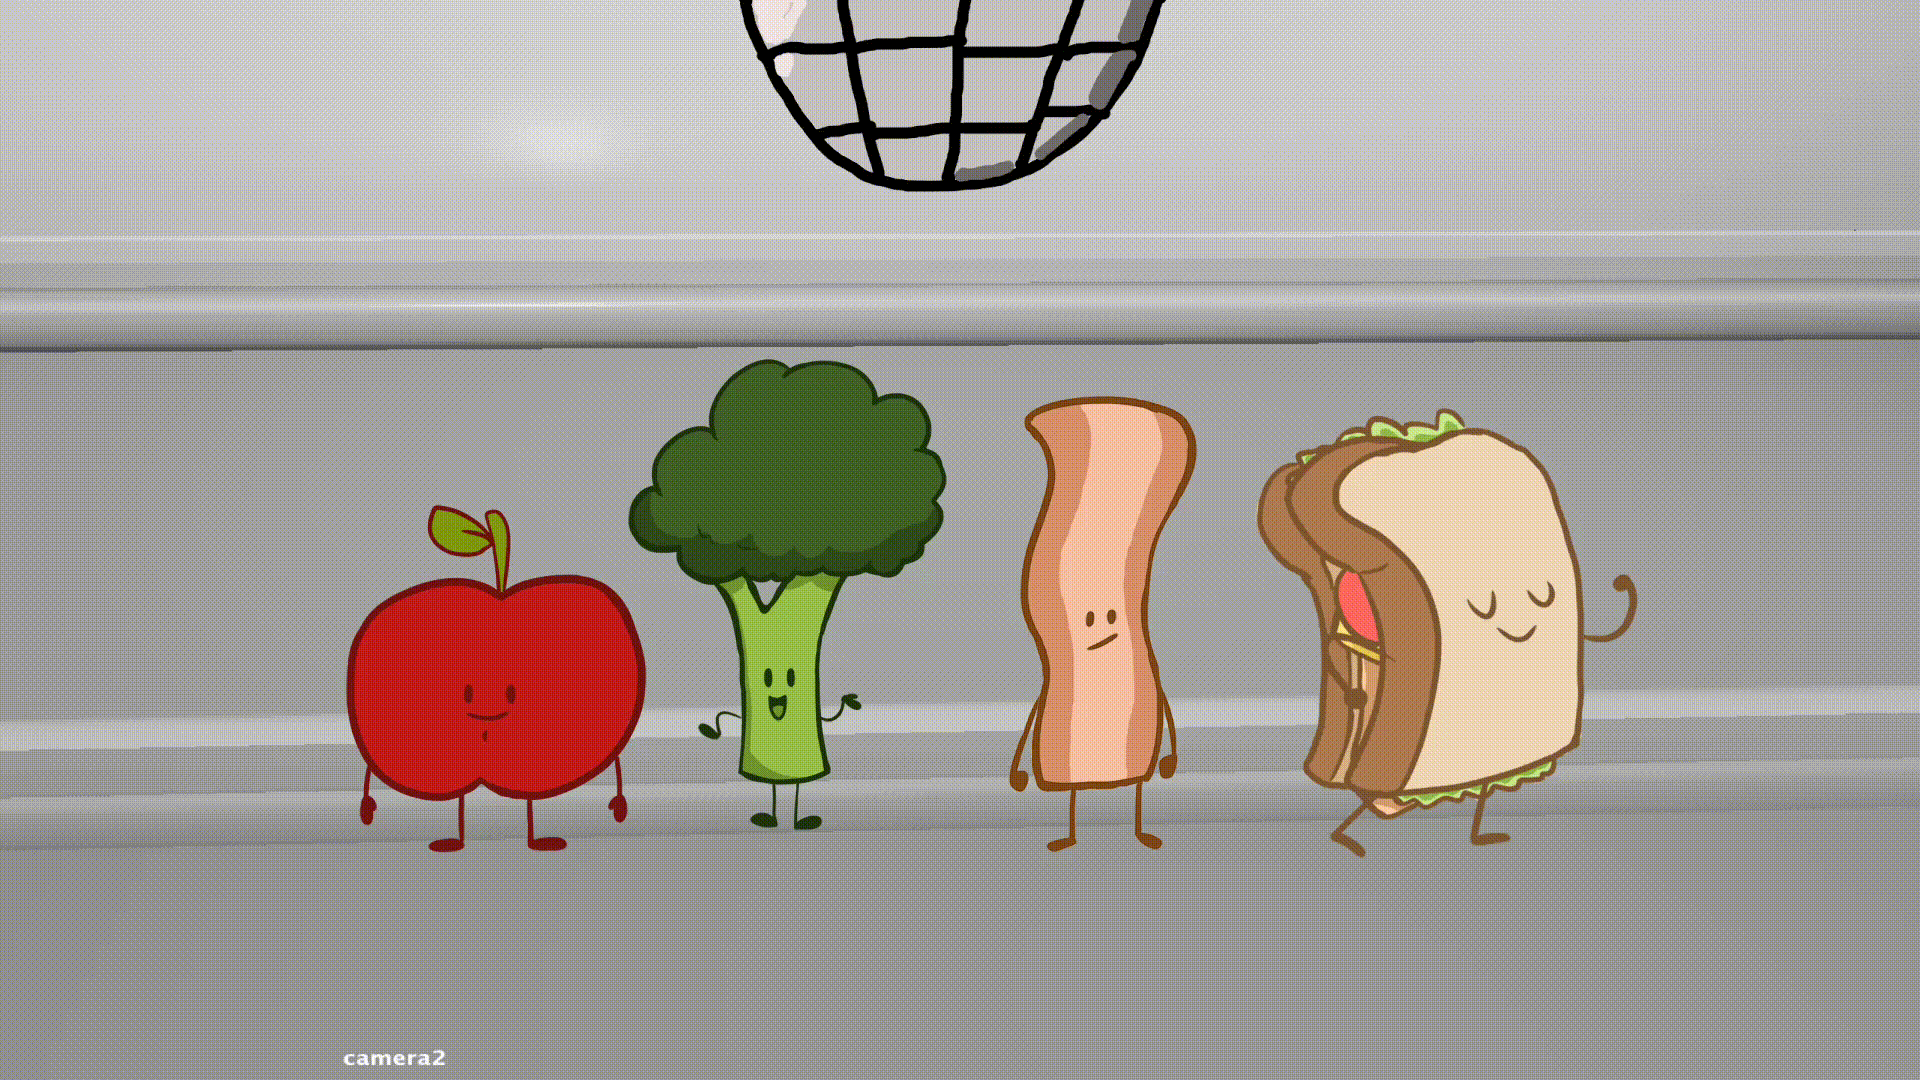 animated gif of apple, broccoli, bacon and sandwich dancing